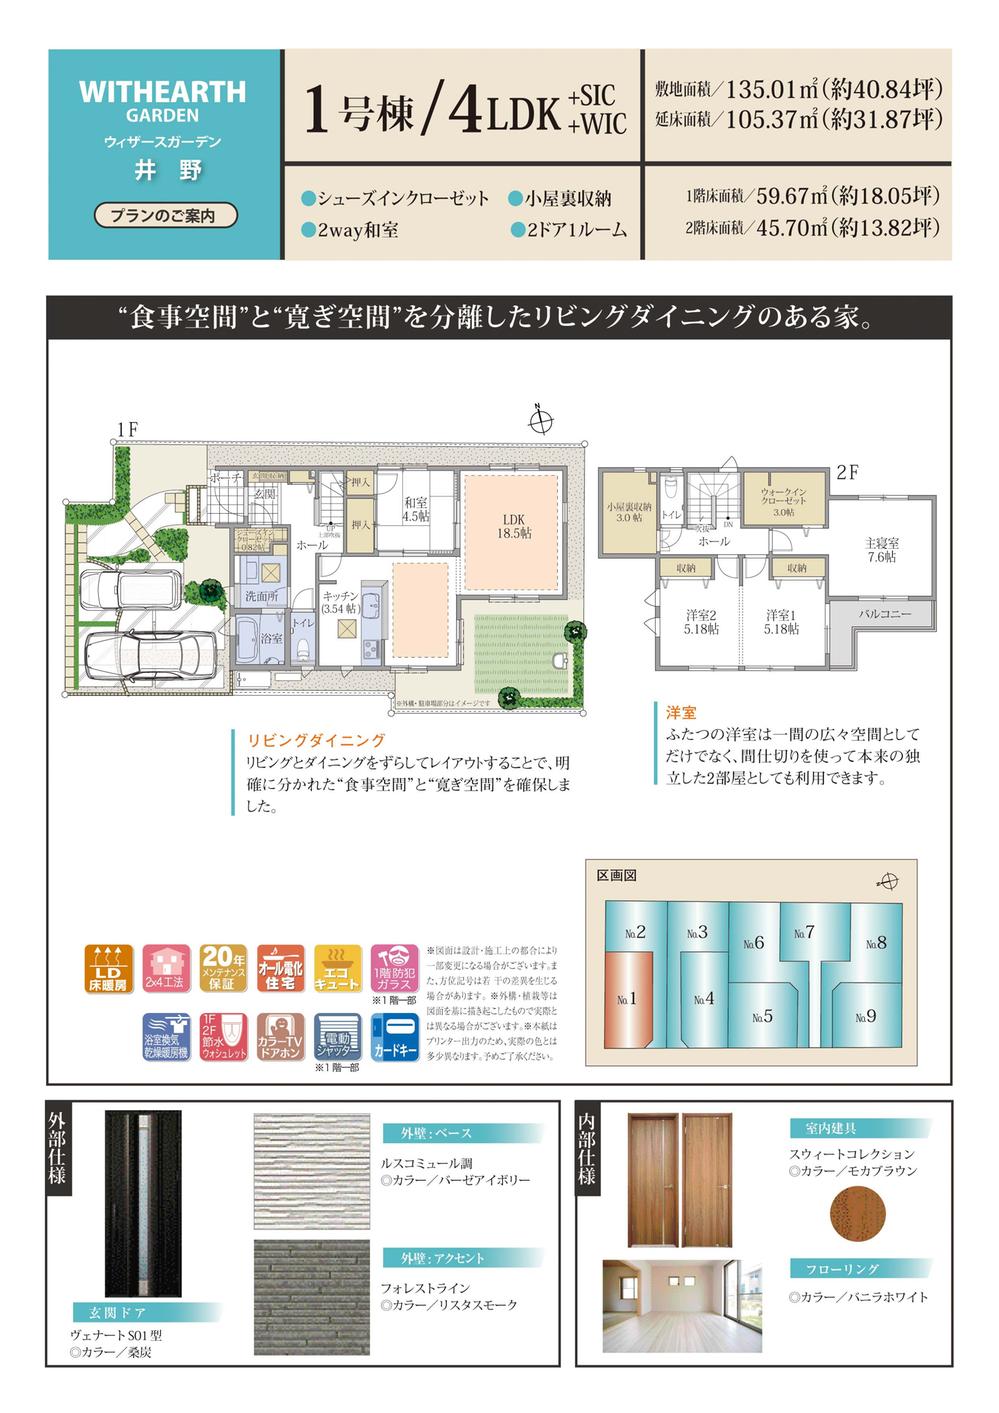 Floor plan. (1 Building) same specification